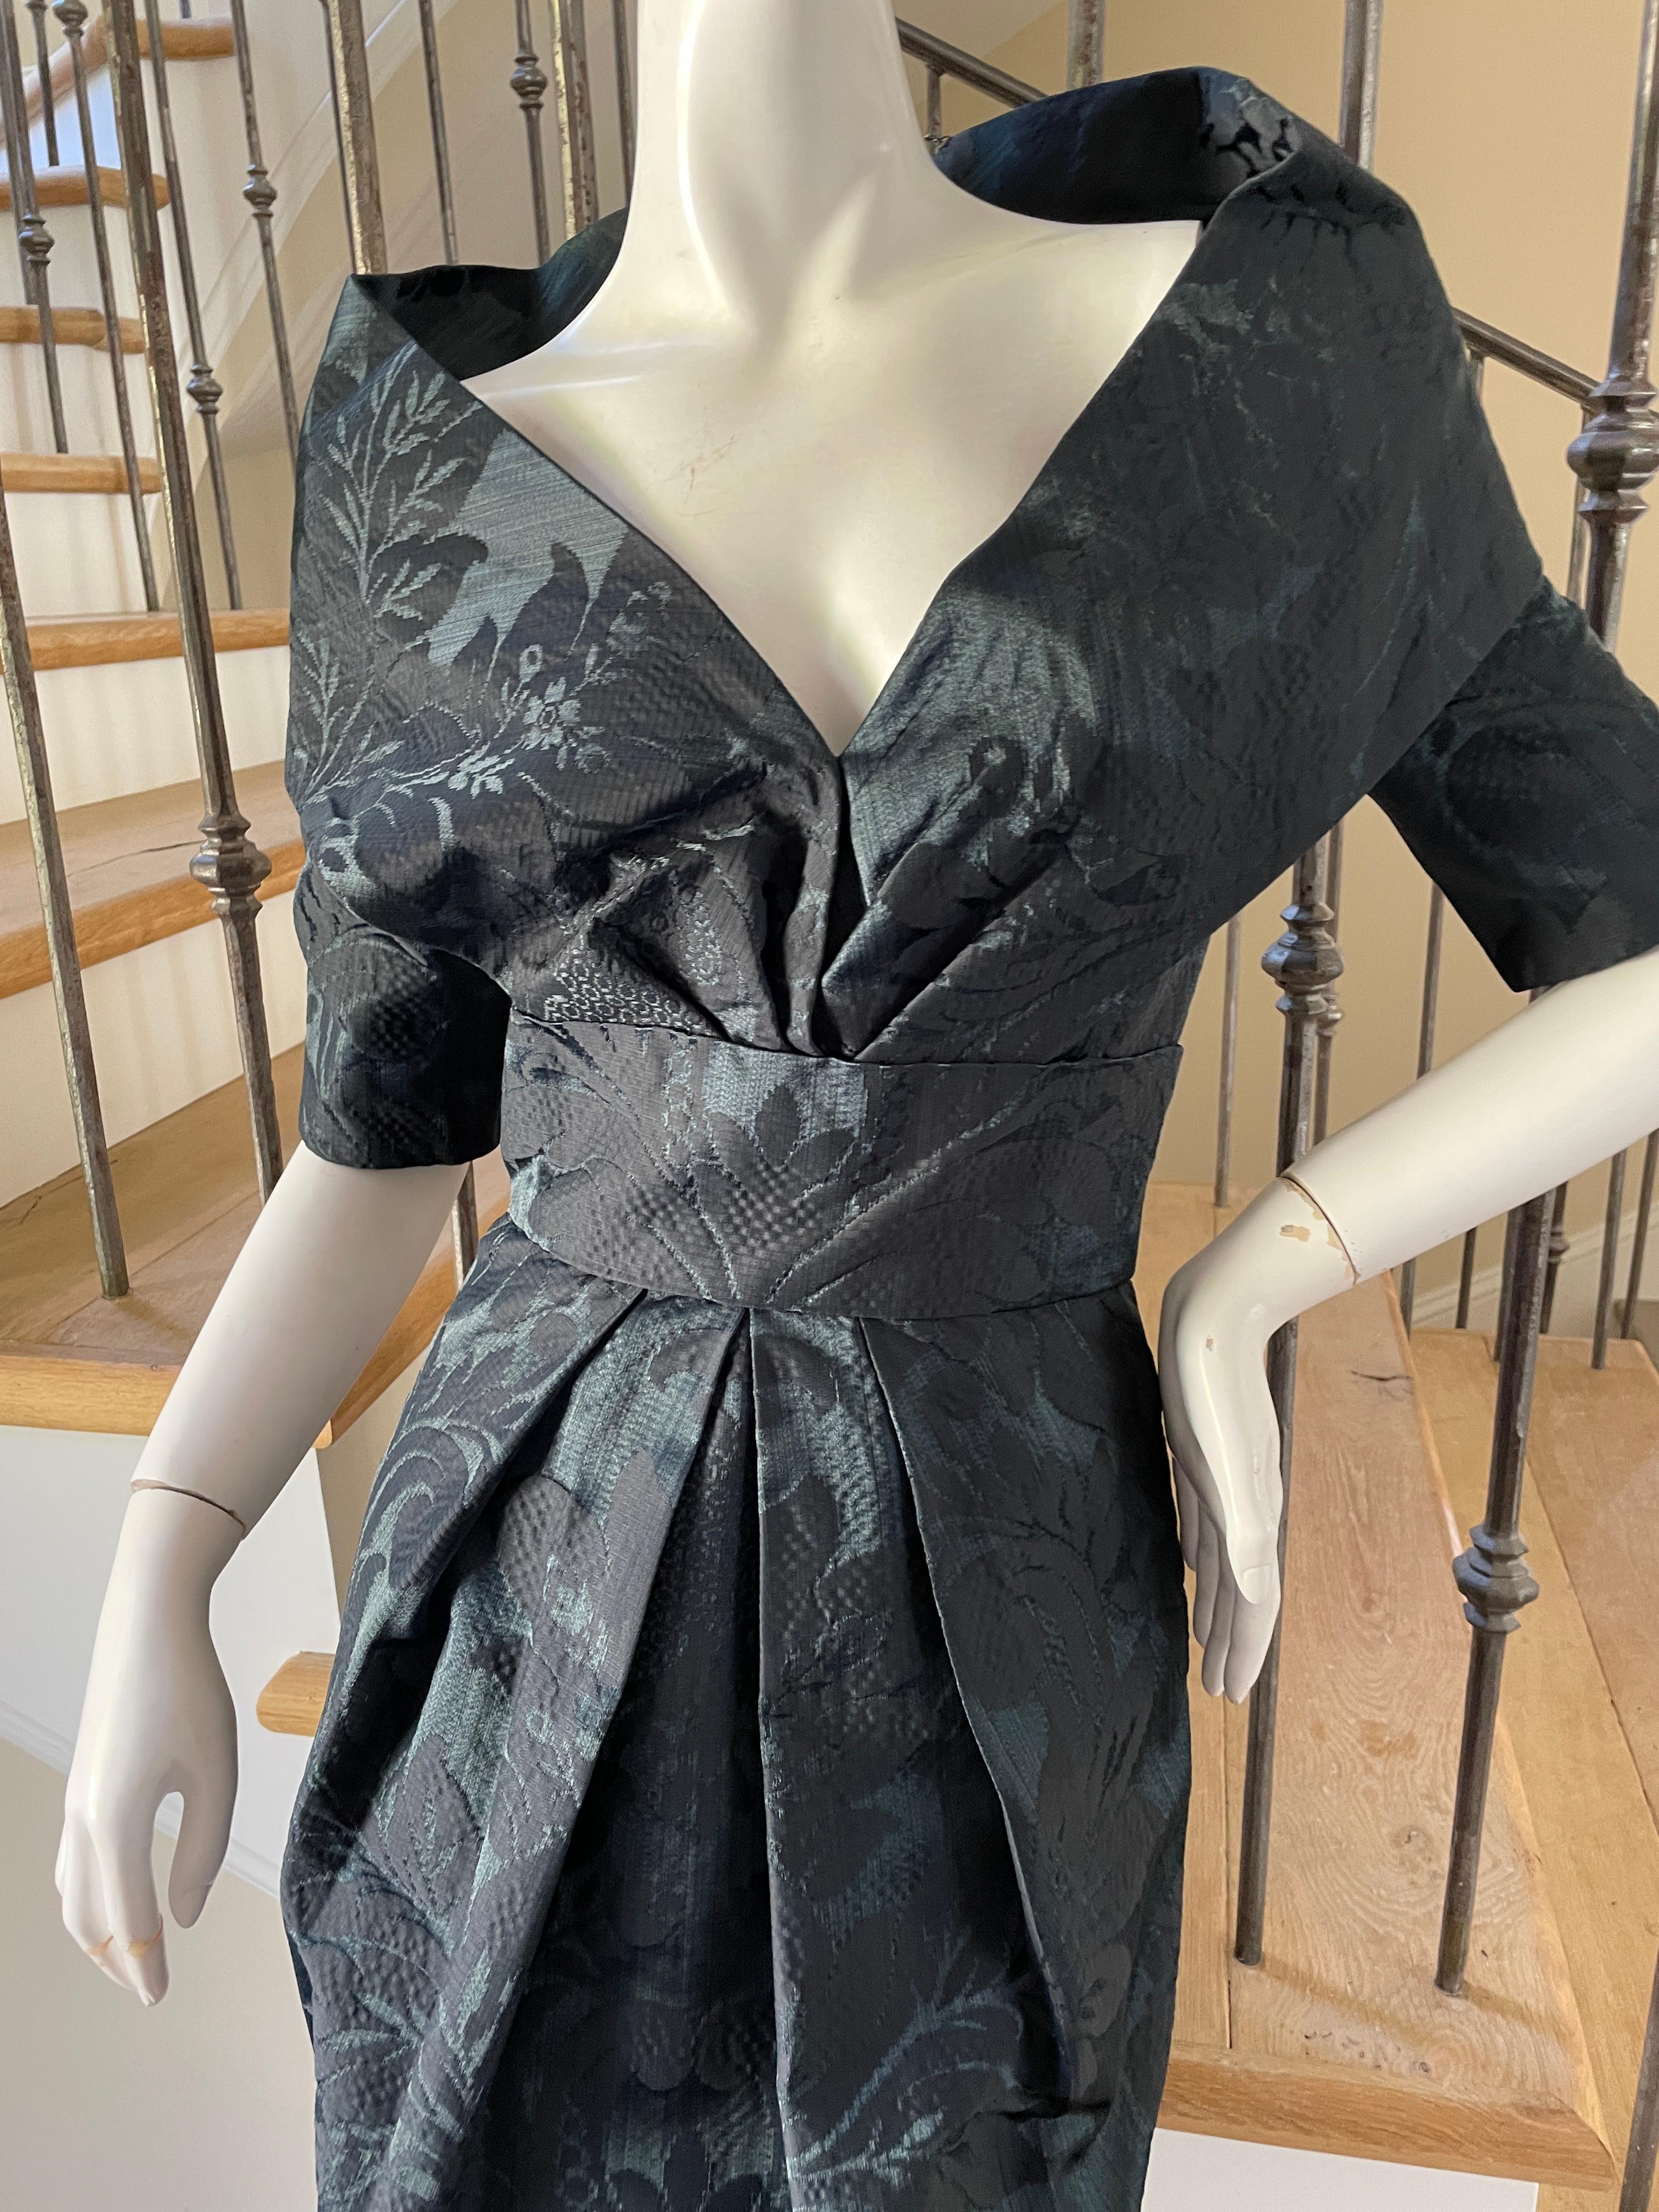 Oscar de la Renta Teal and Black Jacquard Cocktail Dress with Portrait Collar.
Simply Stunning.
Size 4
Bust 34